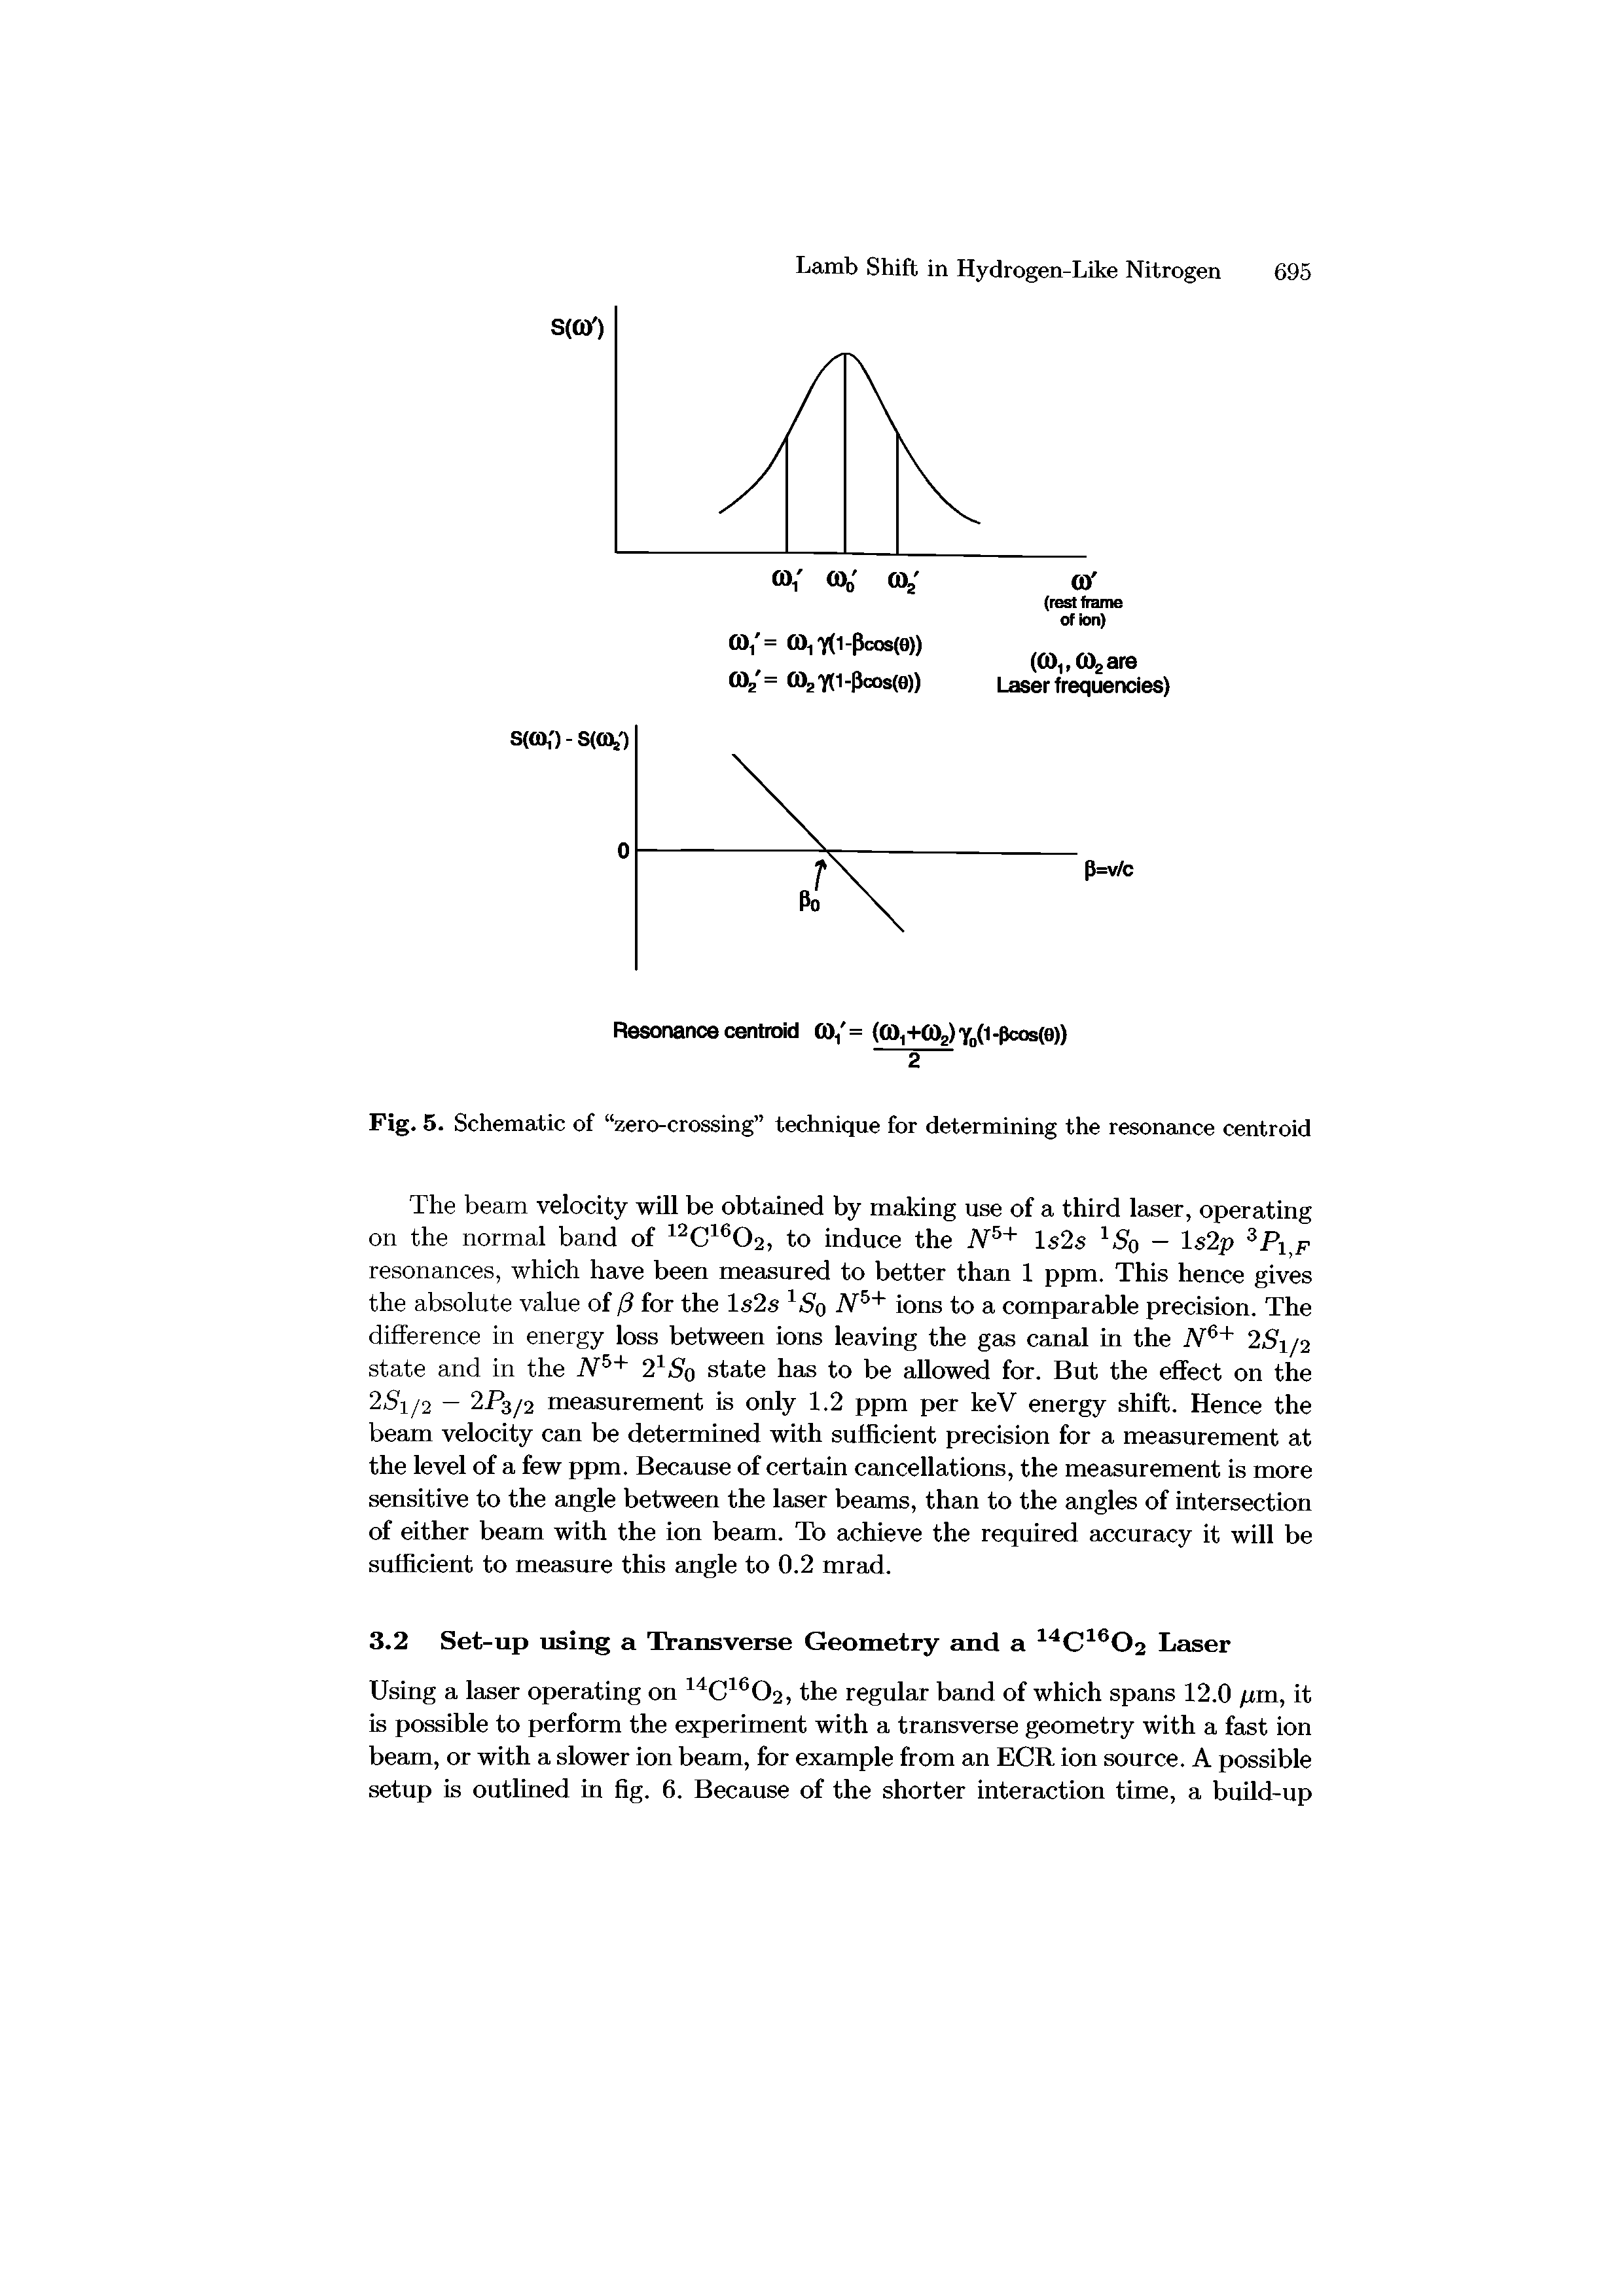 Fig. 5. Schematic of zero-crossing technique for determining the resonance centroid...